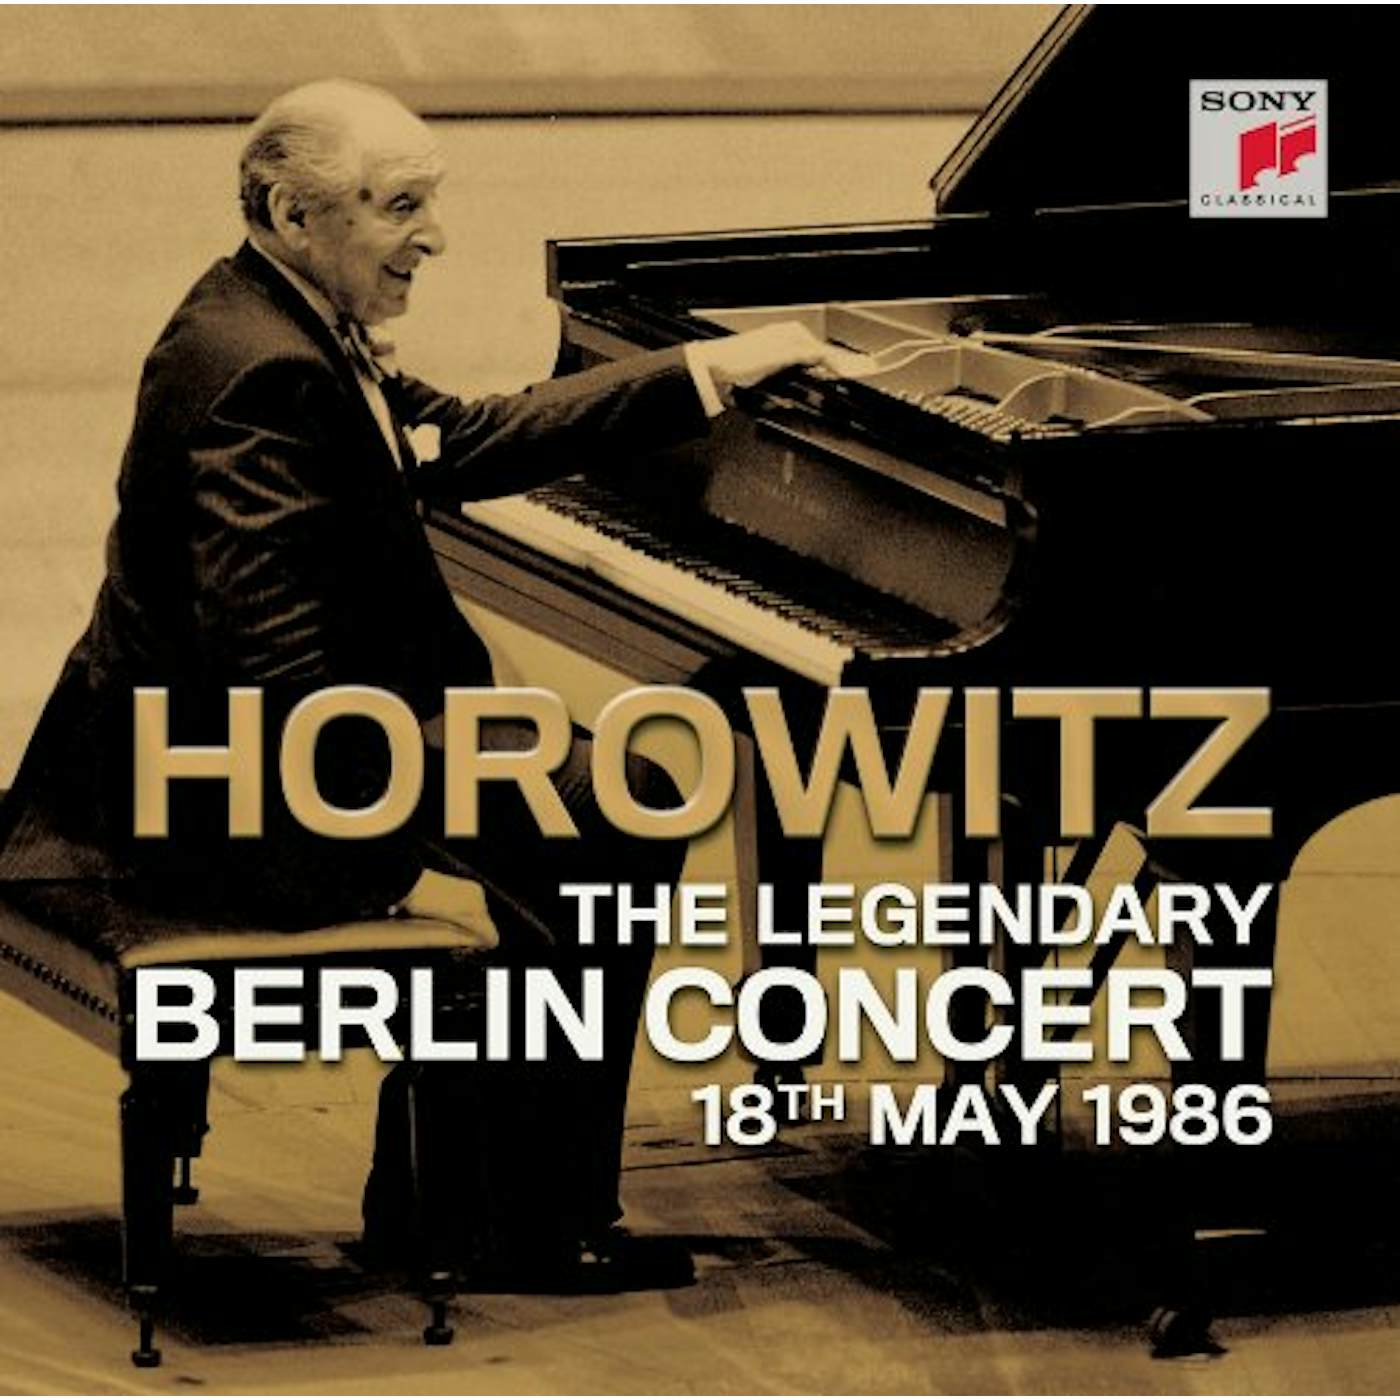 Horowitz, Vladimir LEGENDARY BERLIN CONCERT 18TH MAY 1986 CD